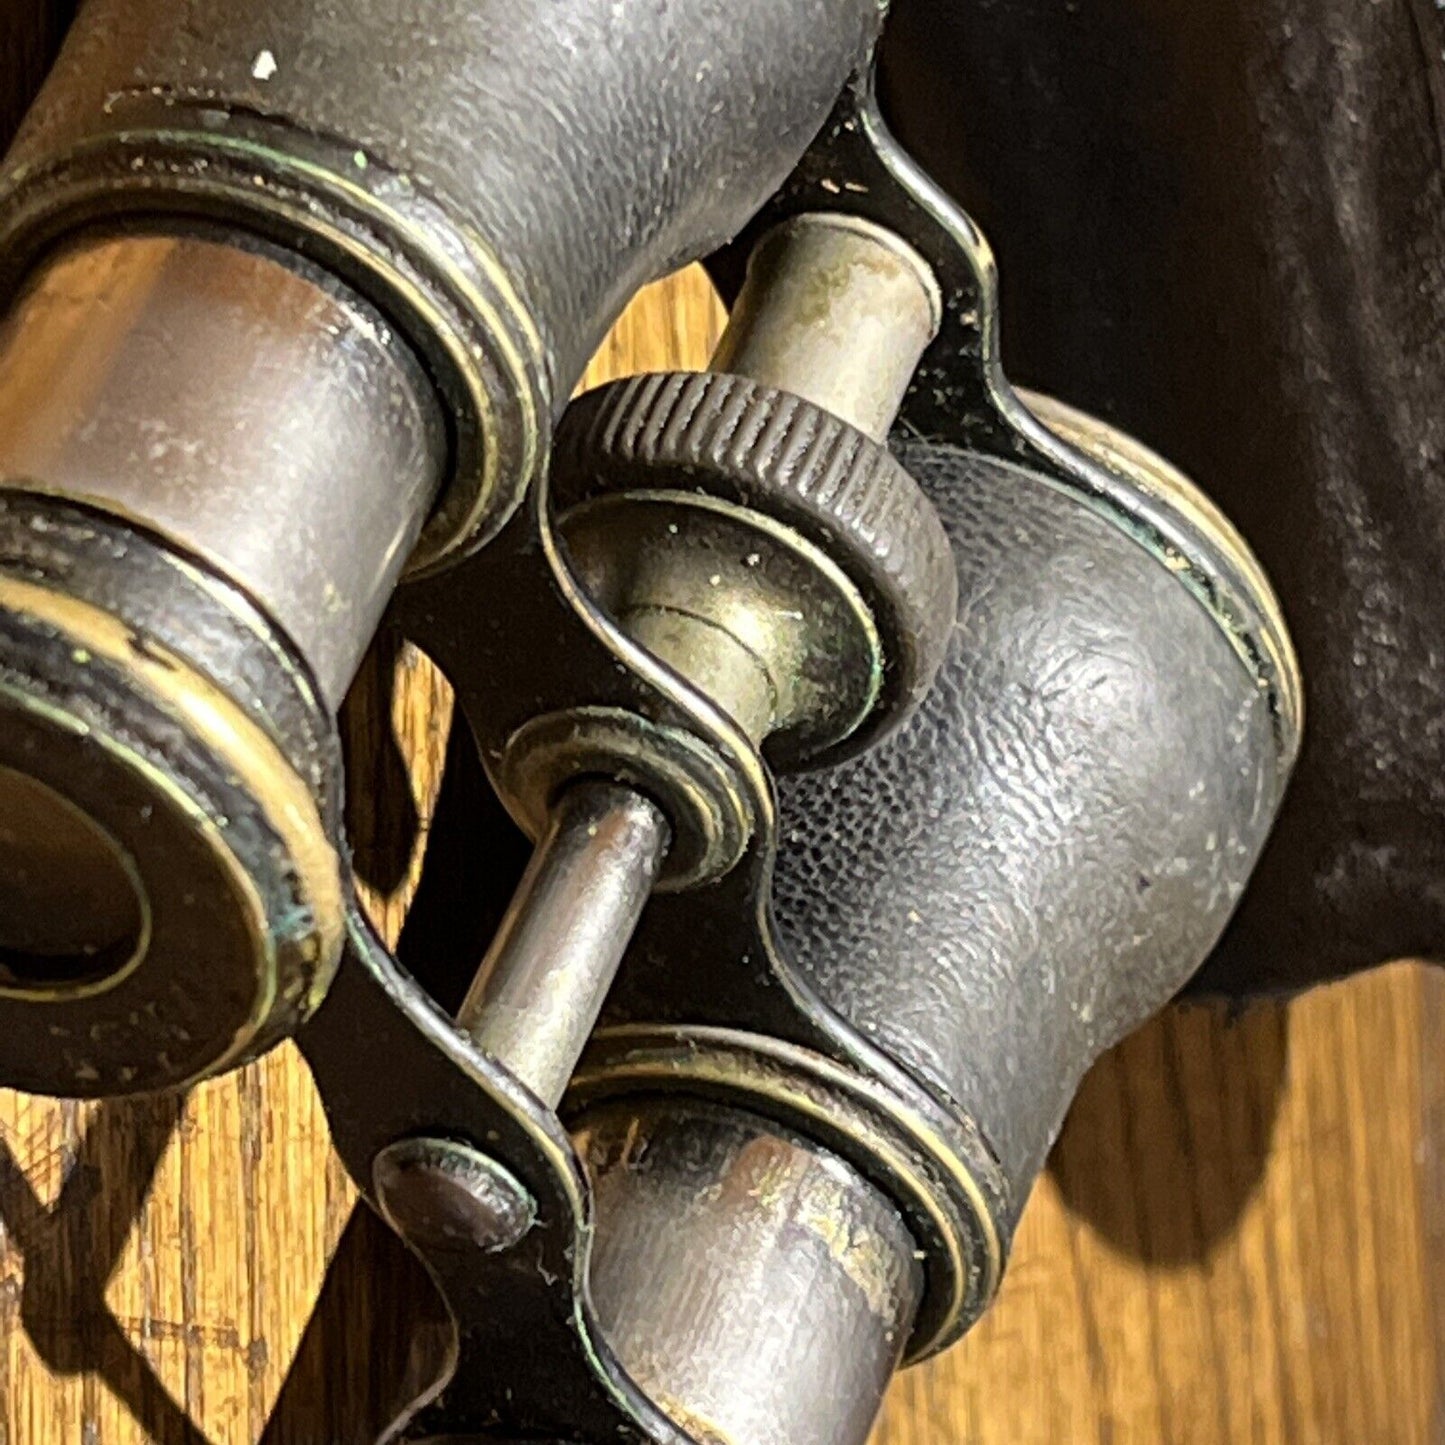 Antique Opera Binoculars Original Leather Lined  Case